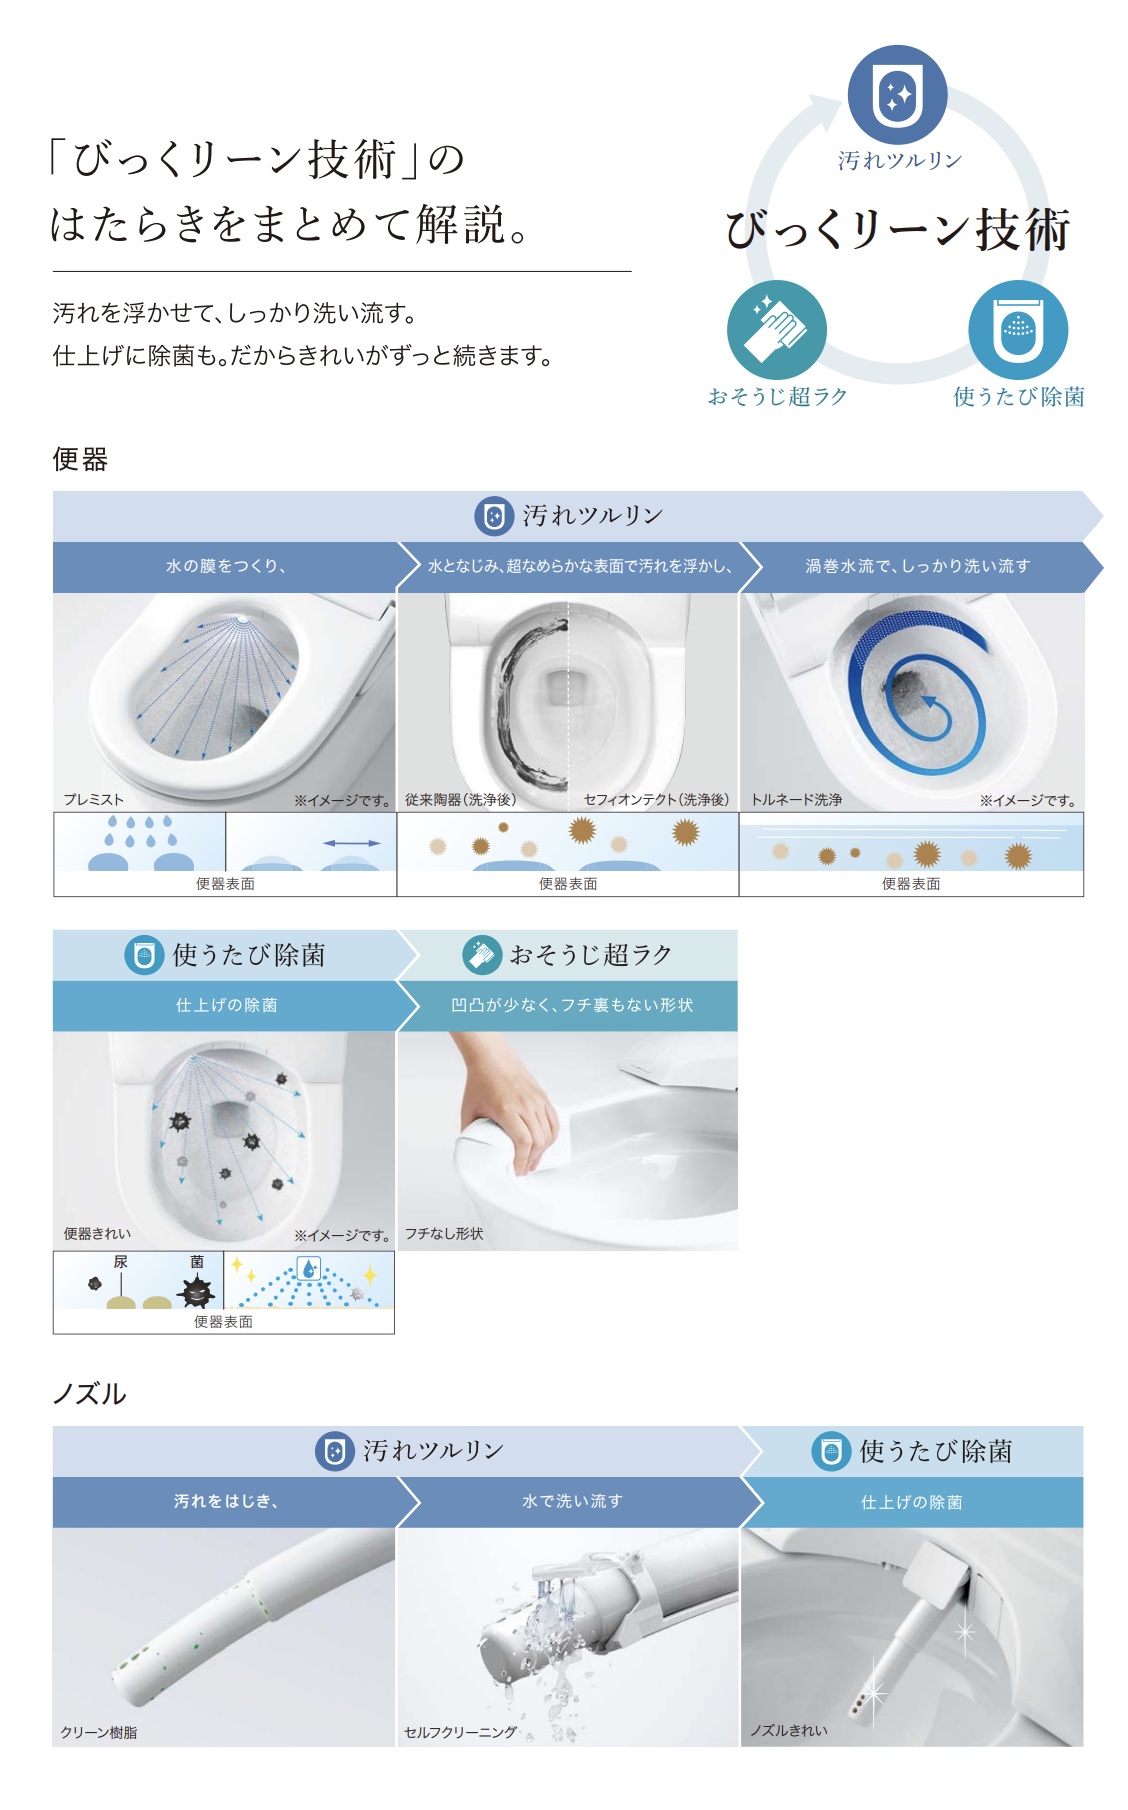 CES9710PXのトイレきれいの技術